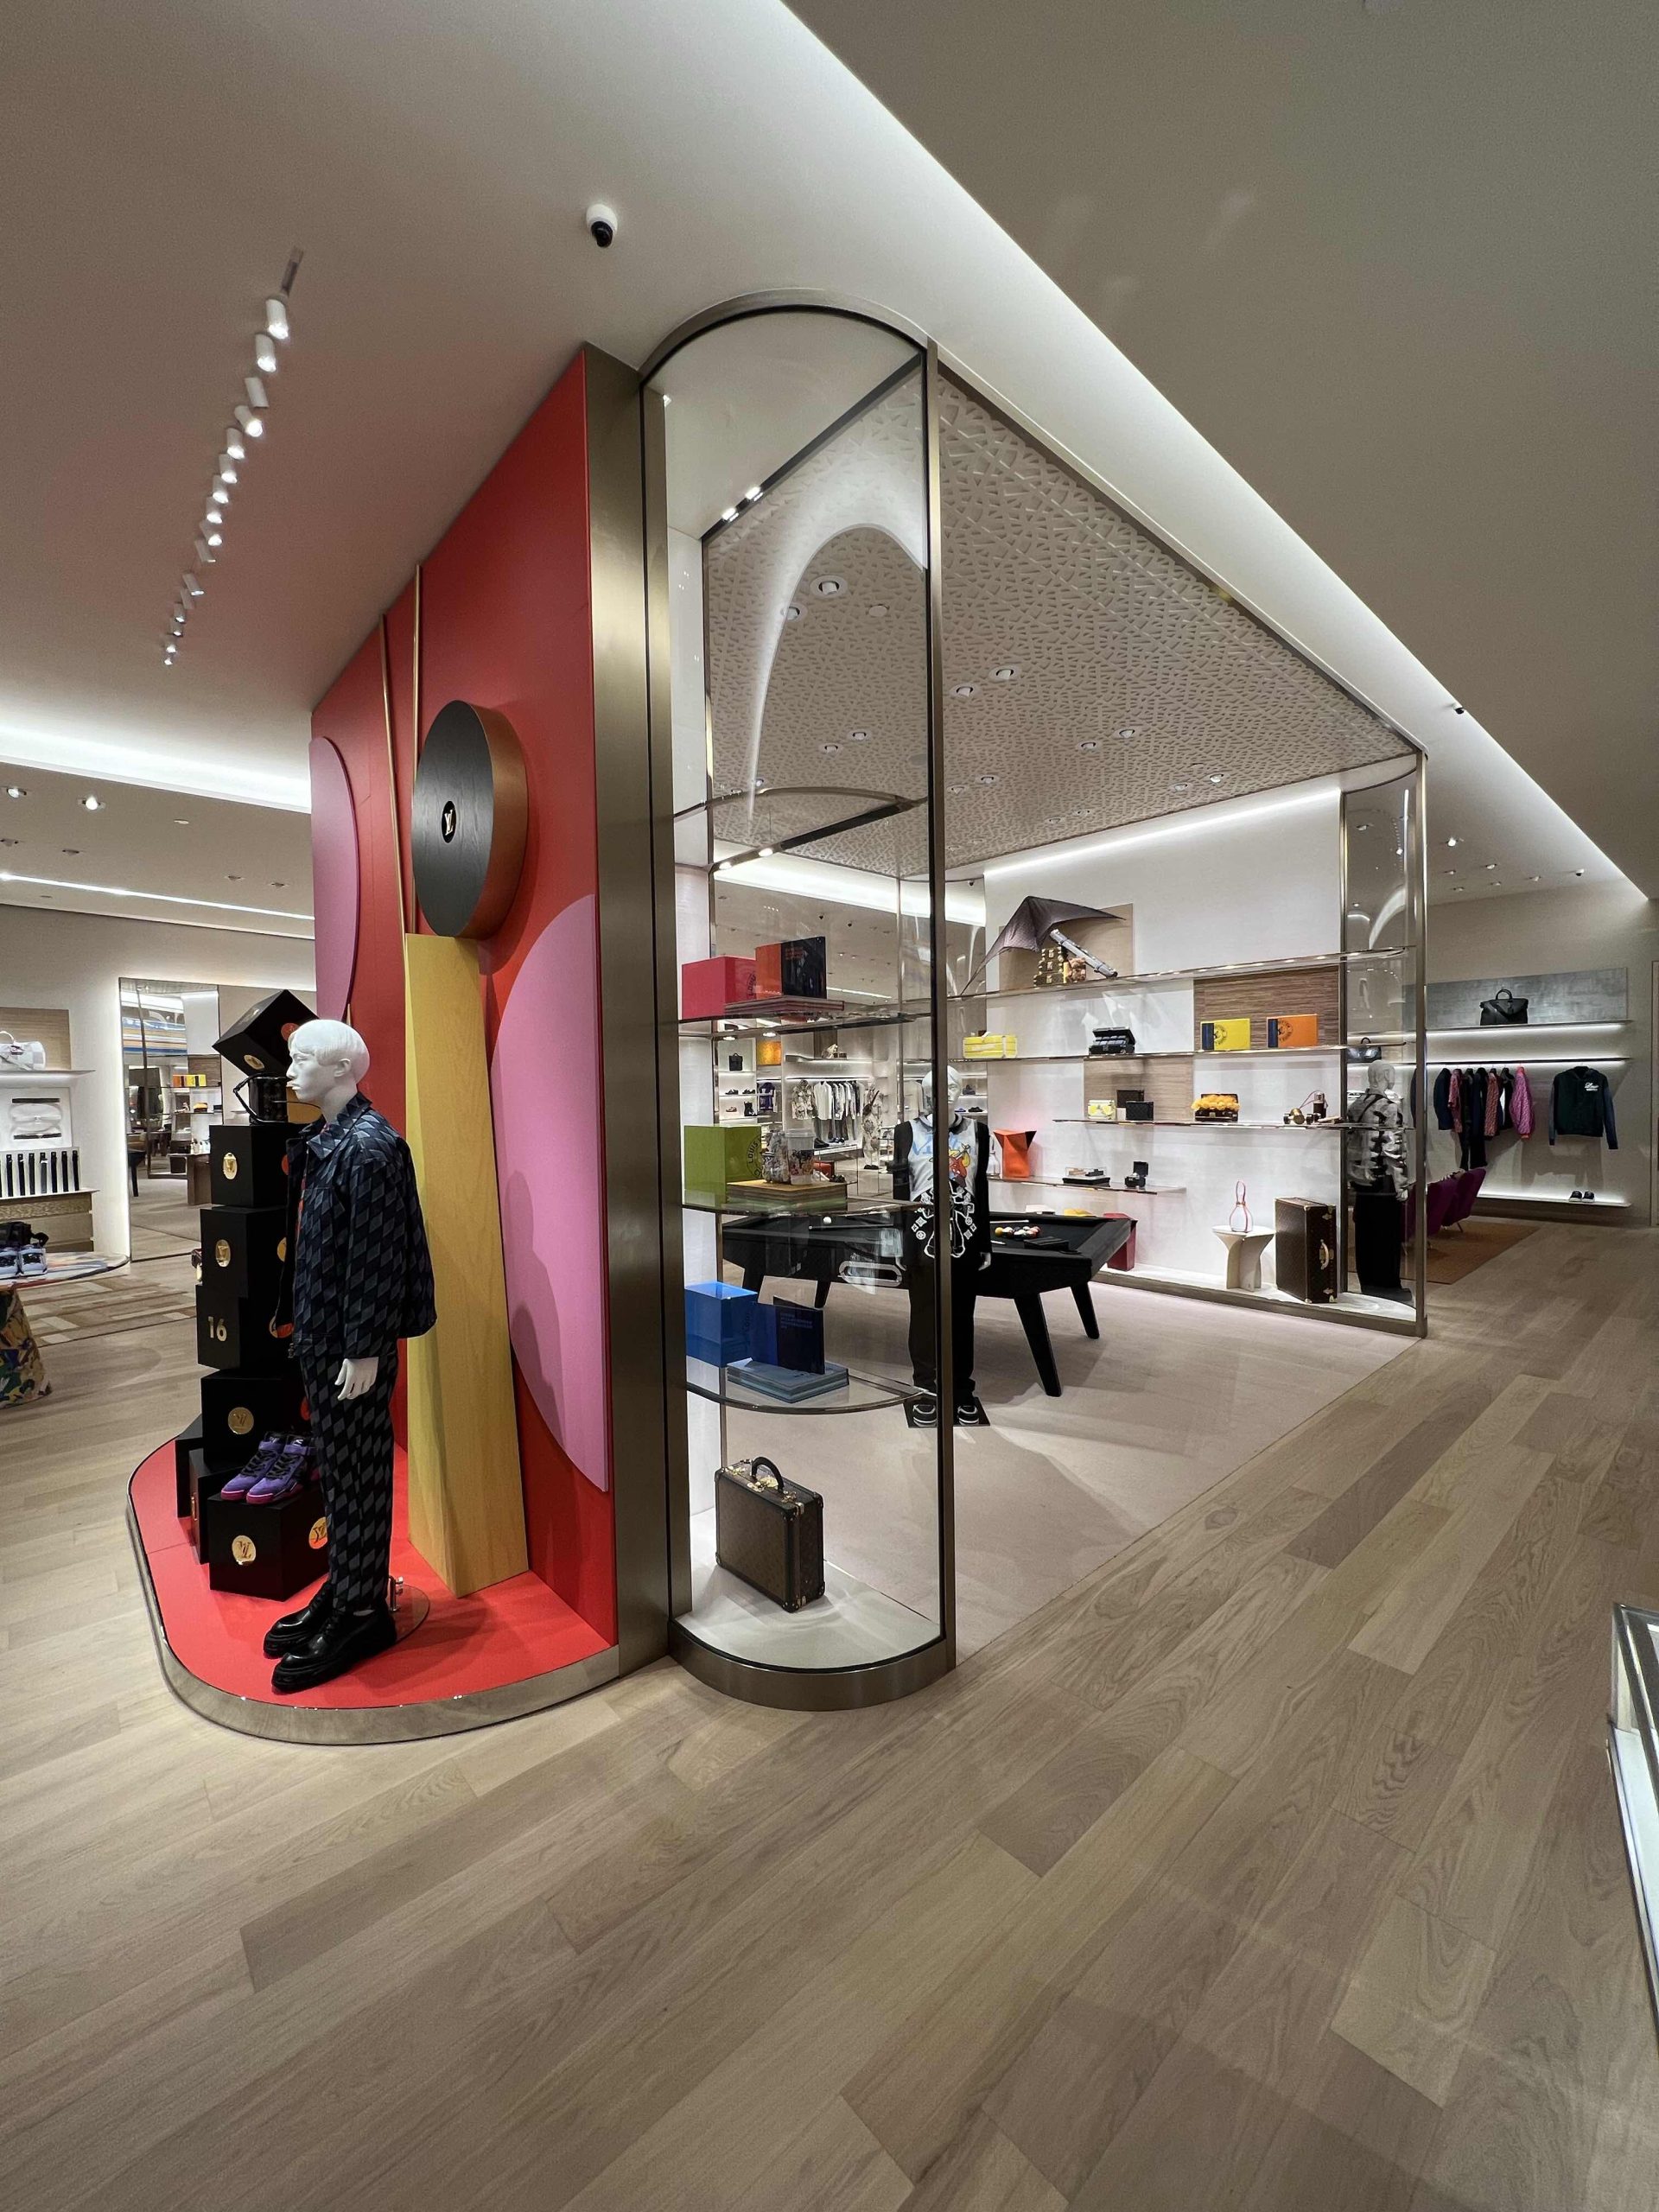 Louis Vuitton Costa Mesa store, United States